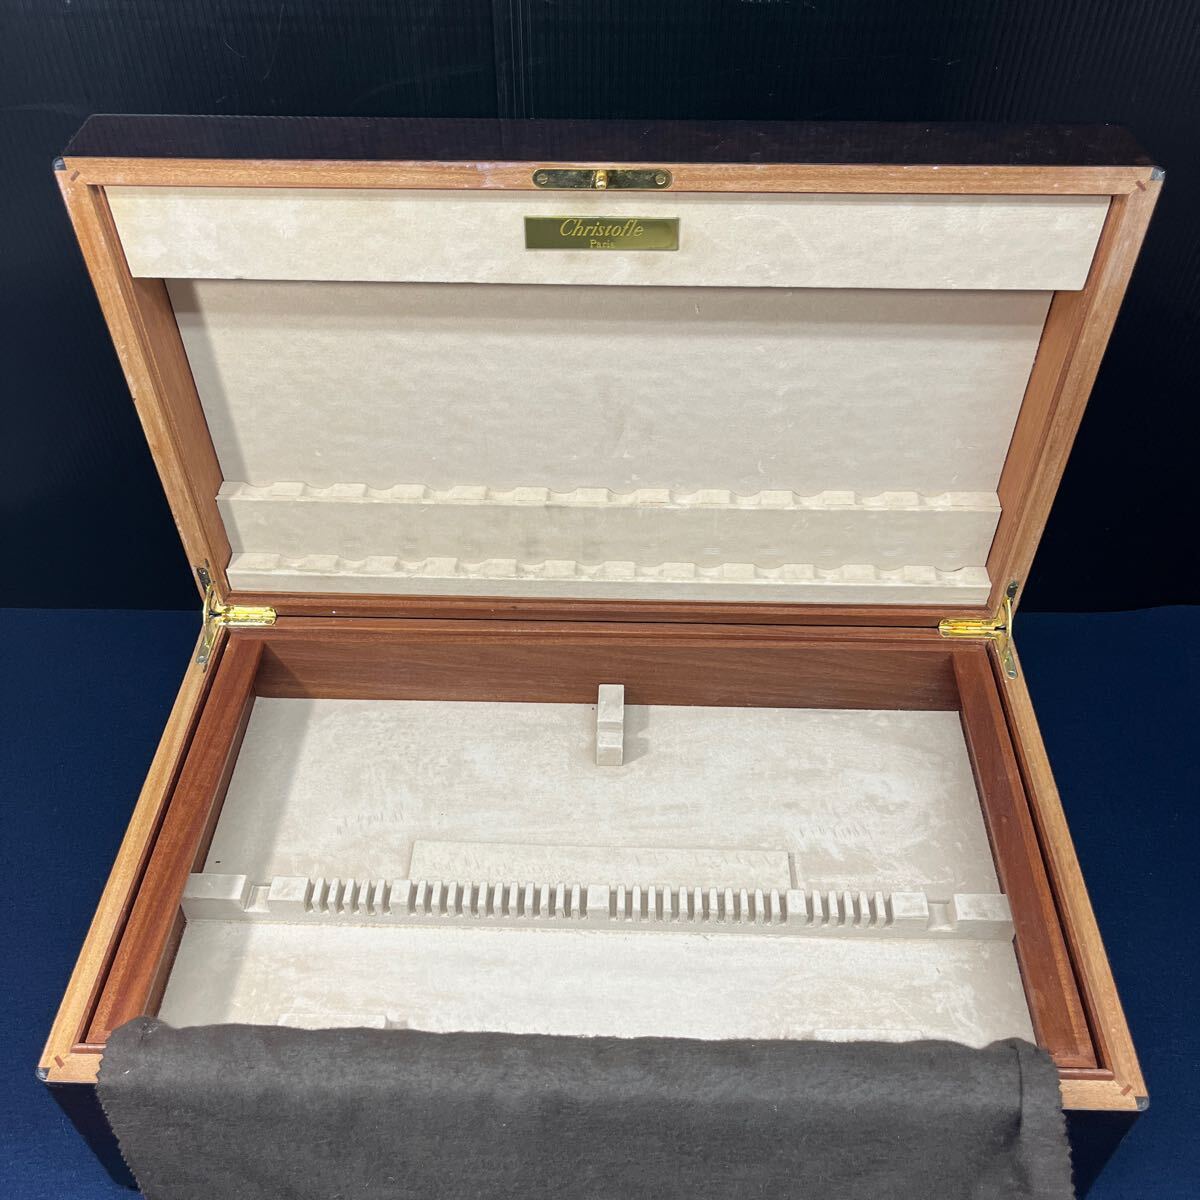 Christofle Paris クリストフル ナイフ フォーク スプーン カトラリー ボックス 2段 オリジナル 収納ケース 木箱 木製 の画像7